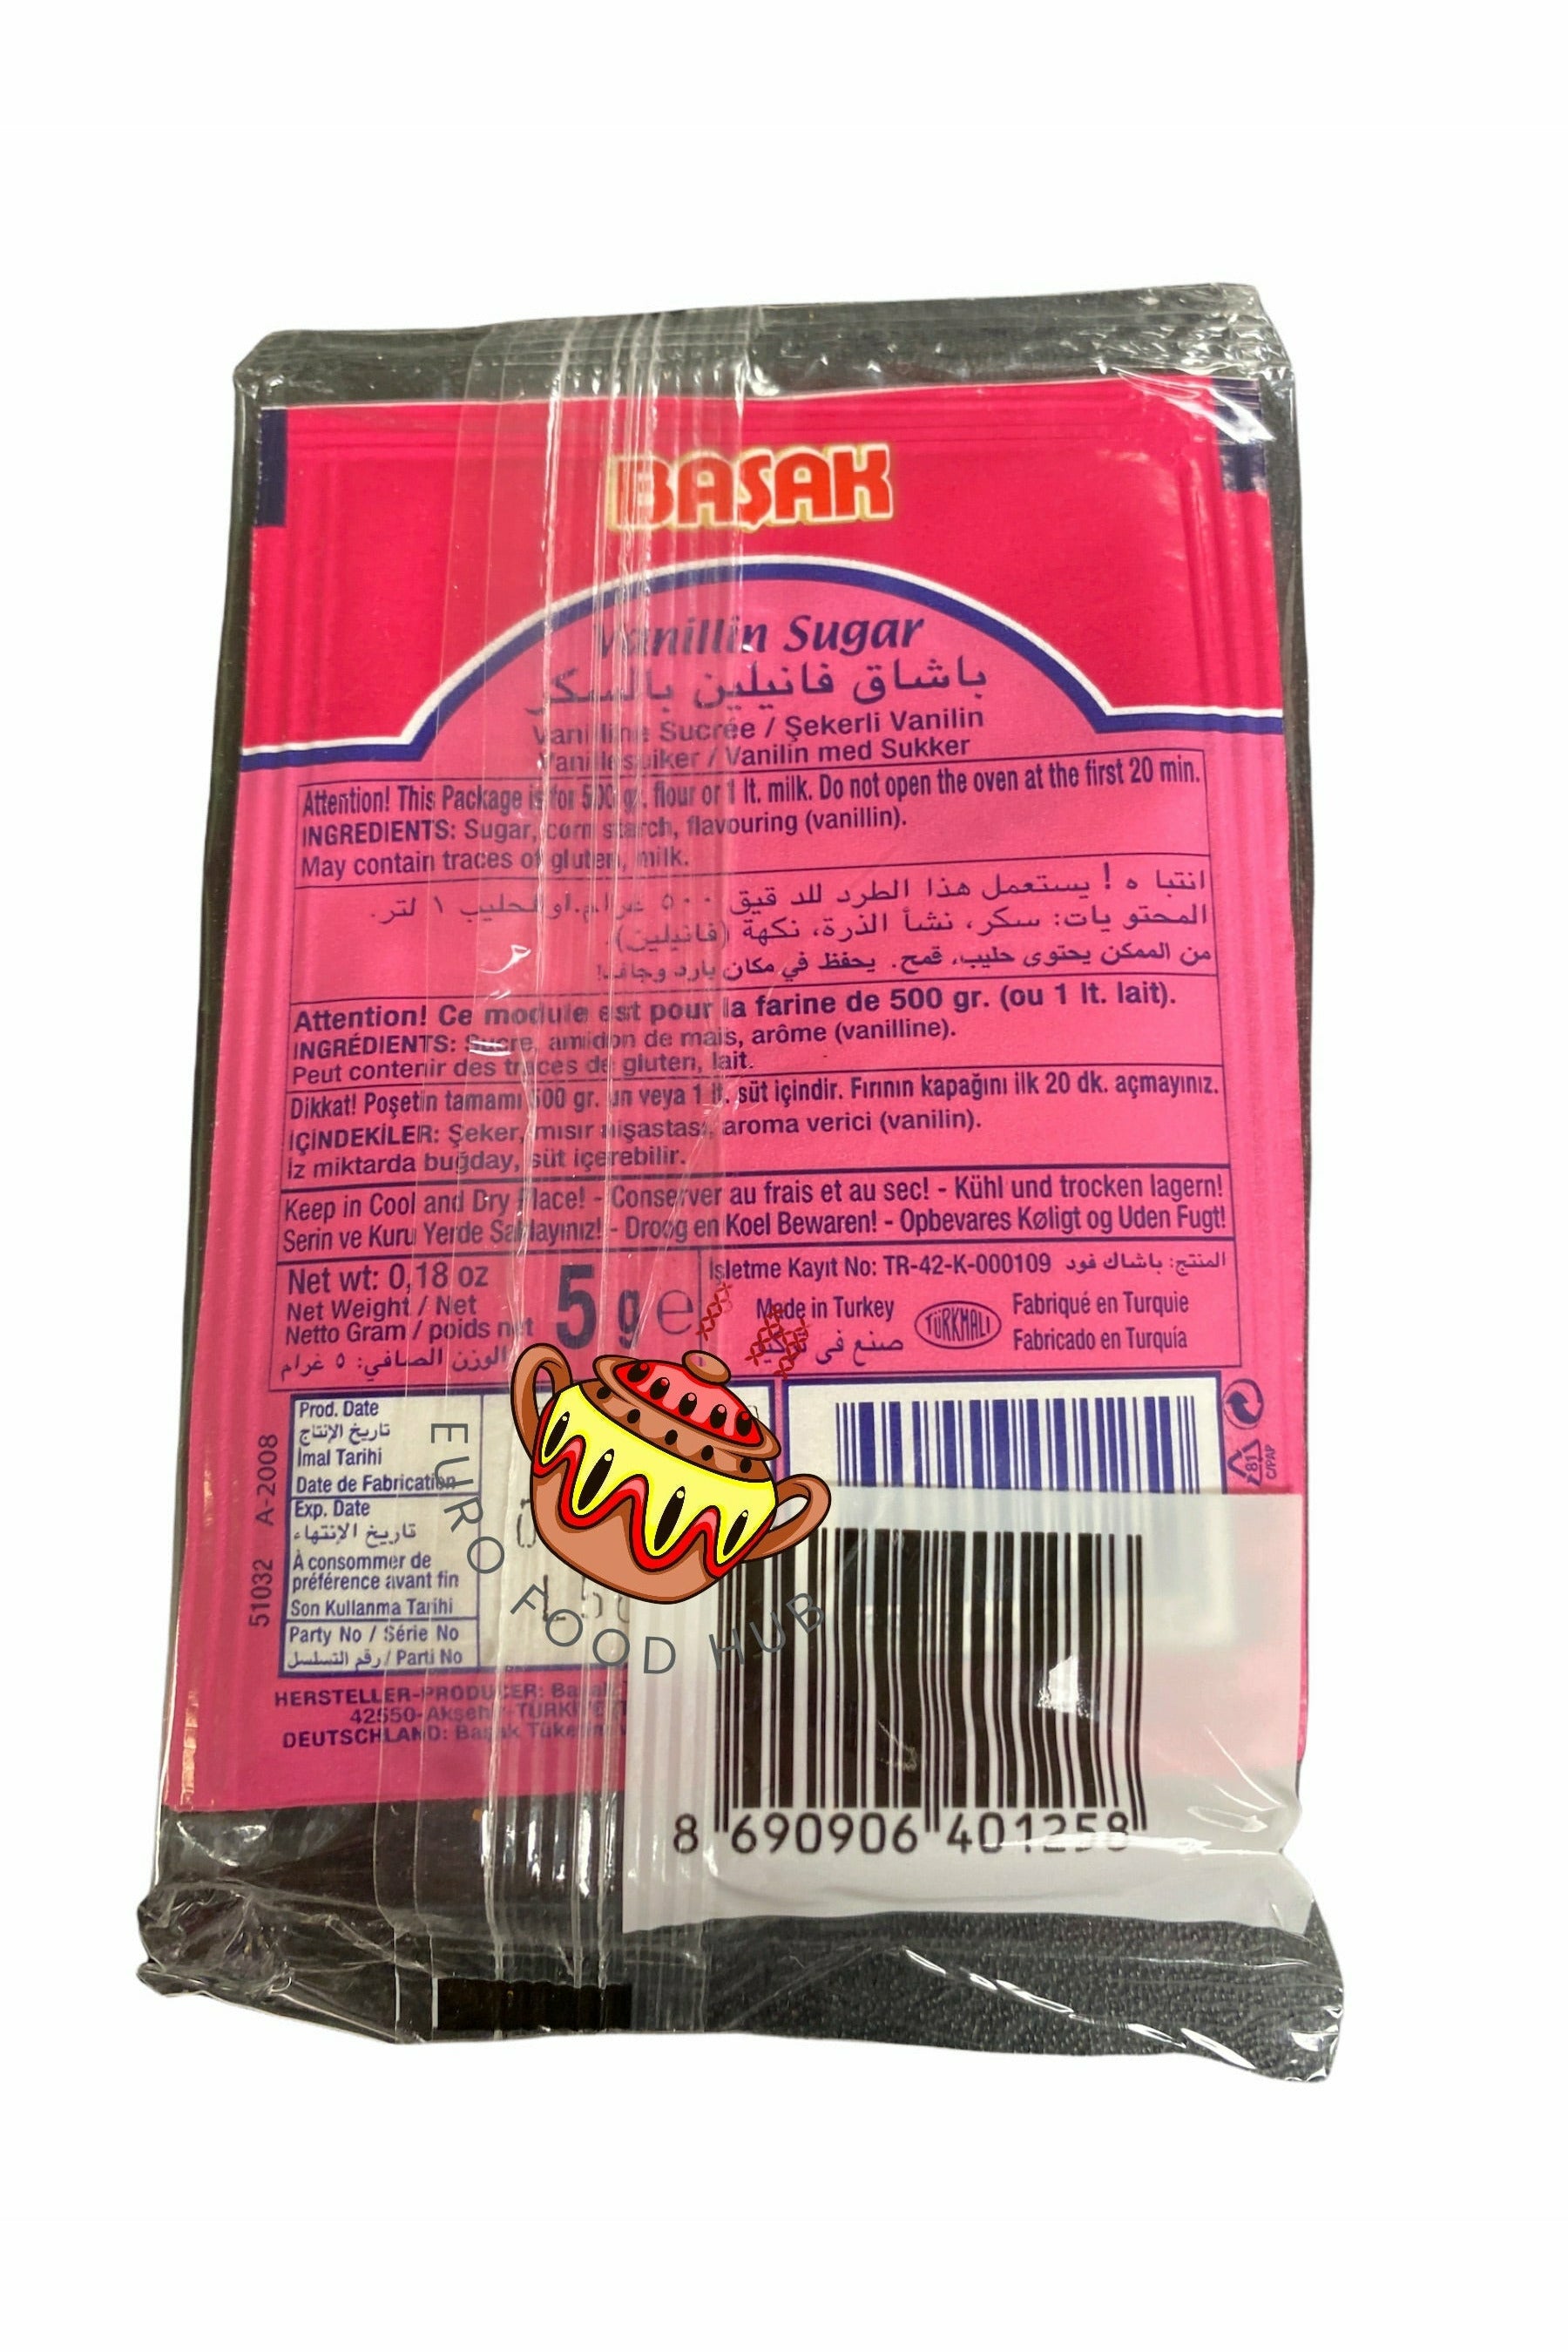 Vanilla Sugar - Basak - 5 pack